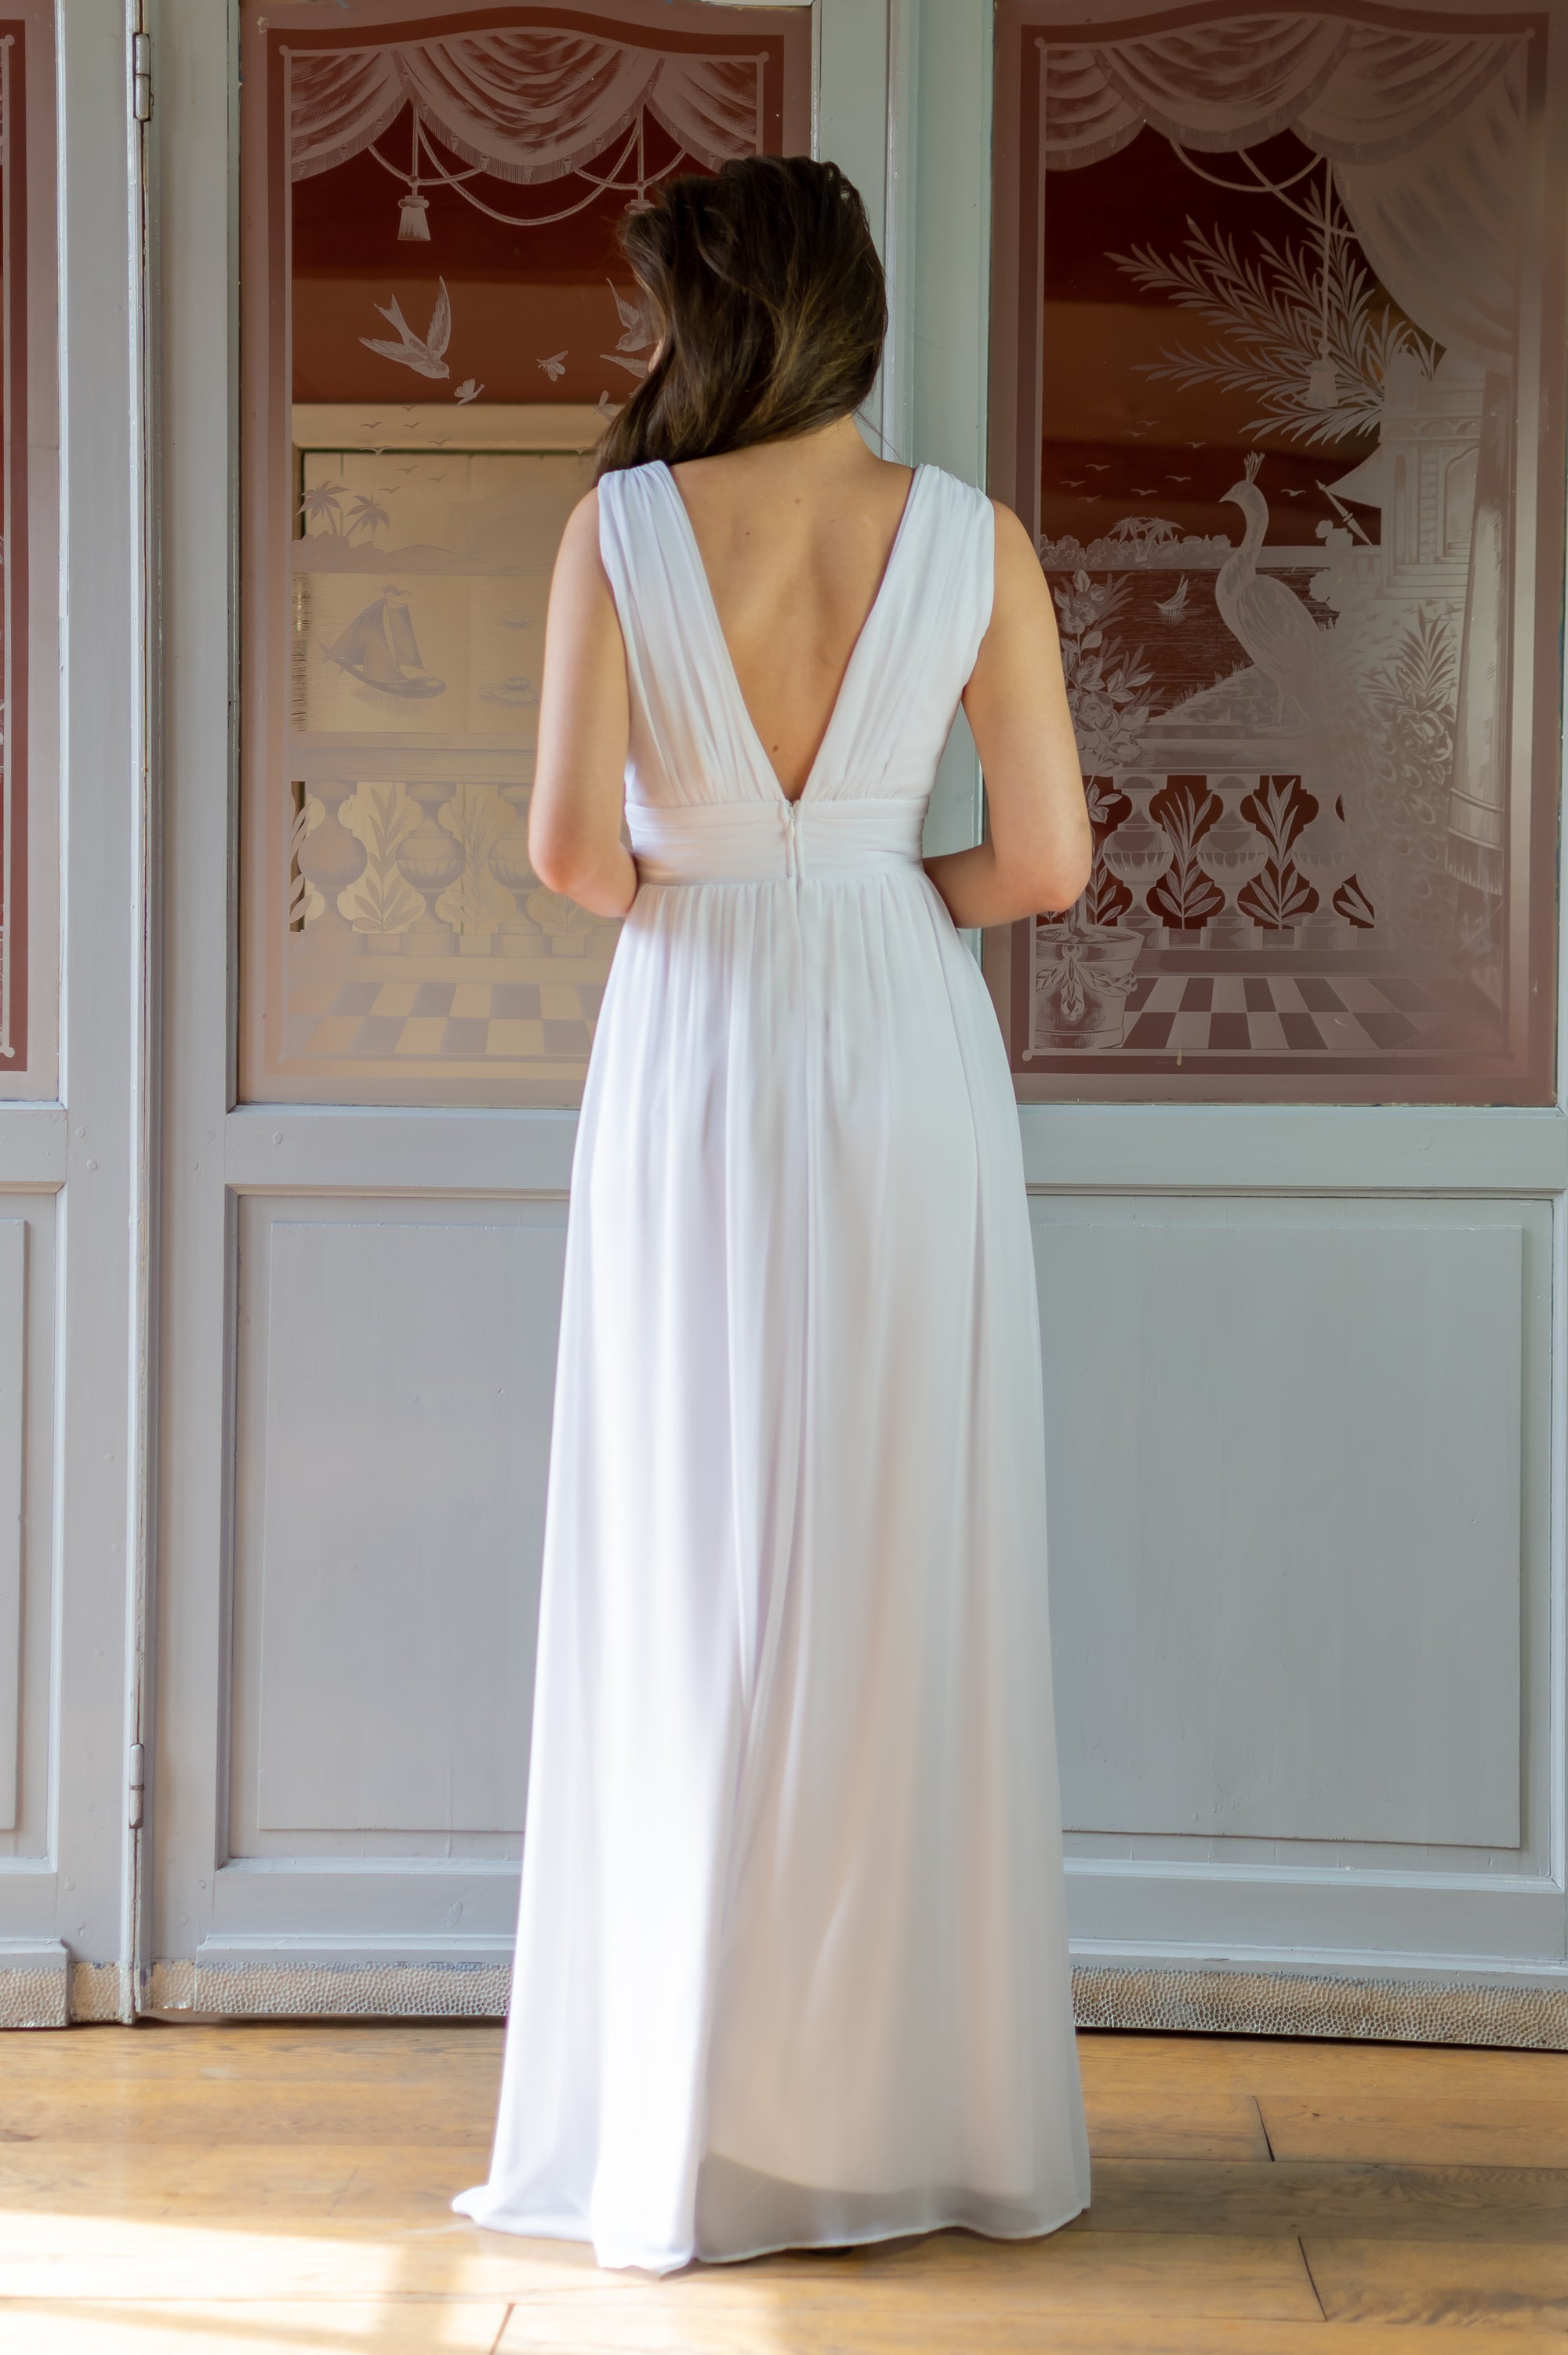 Goddess Dress - White